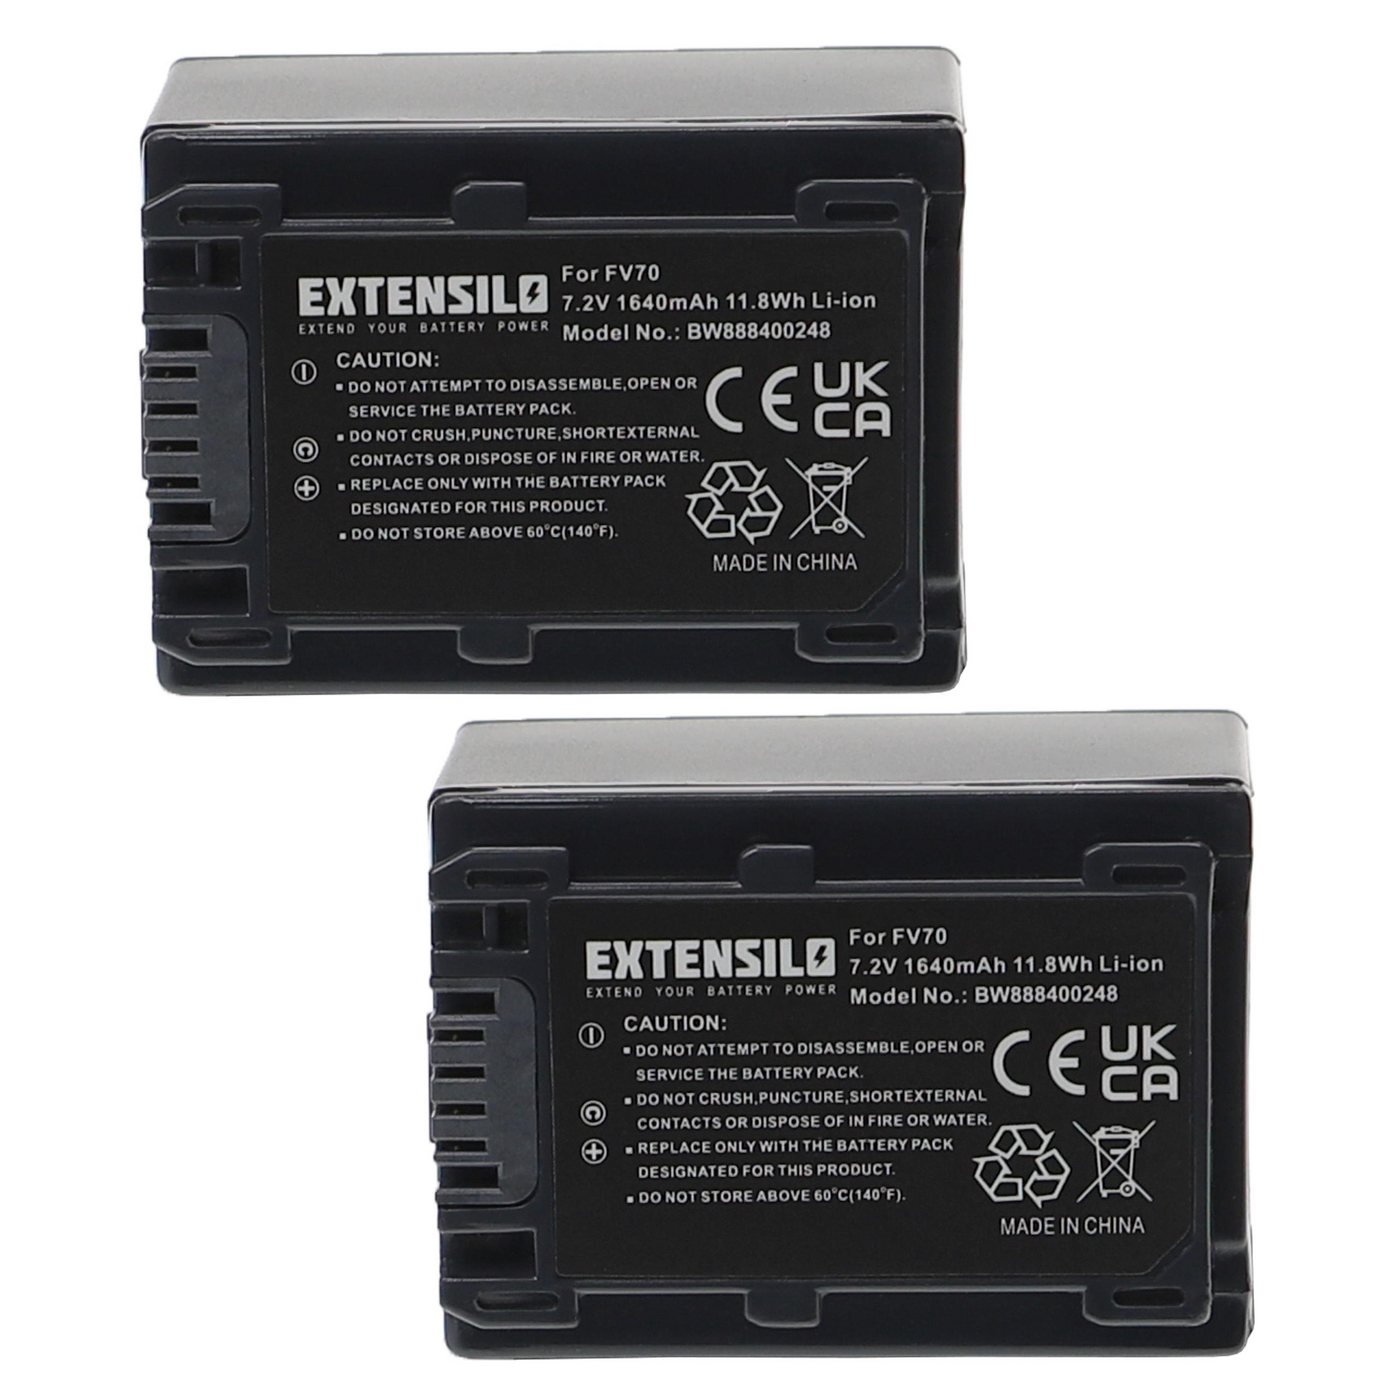 Extensilo passend für Sony HDR-CX150E/B, HDR-CX150R, HDR-CX155VE, HDR-CX150E, HDR-CX155E, HDR-CX160 Kamera / Foto DSLR / Camcorder Analog / Camcorder Digital (1640mAh, 7,2V, Li-Ion) Kamera-Akku 1640 mAh von Extensilo